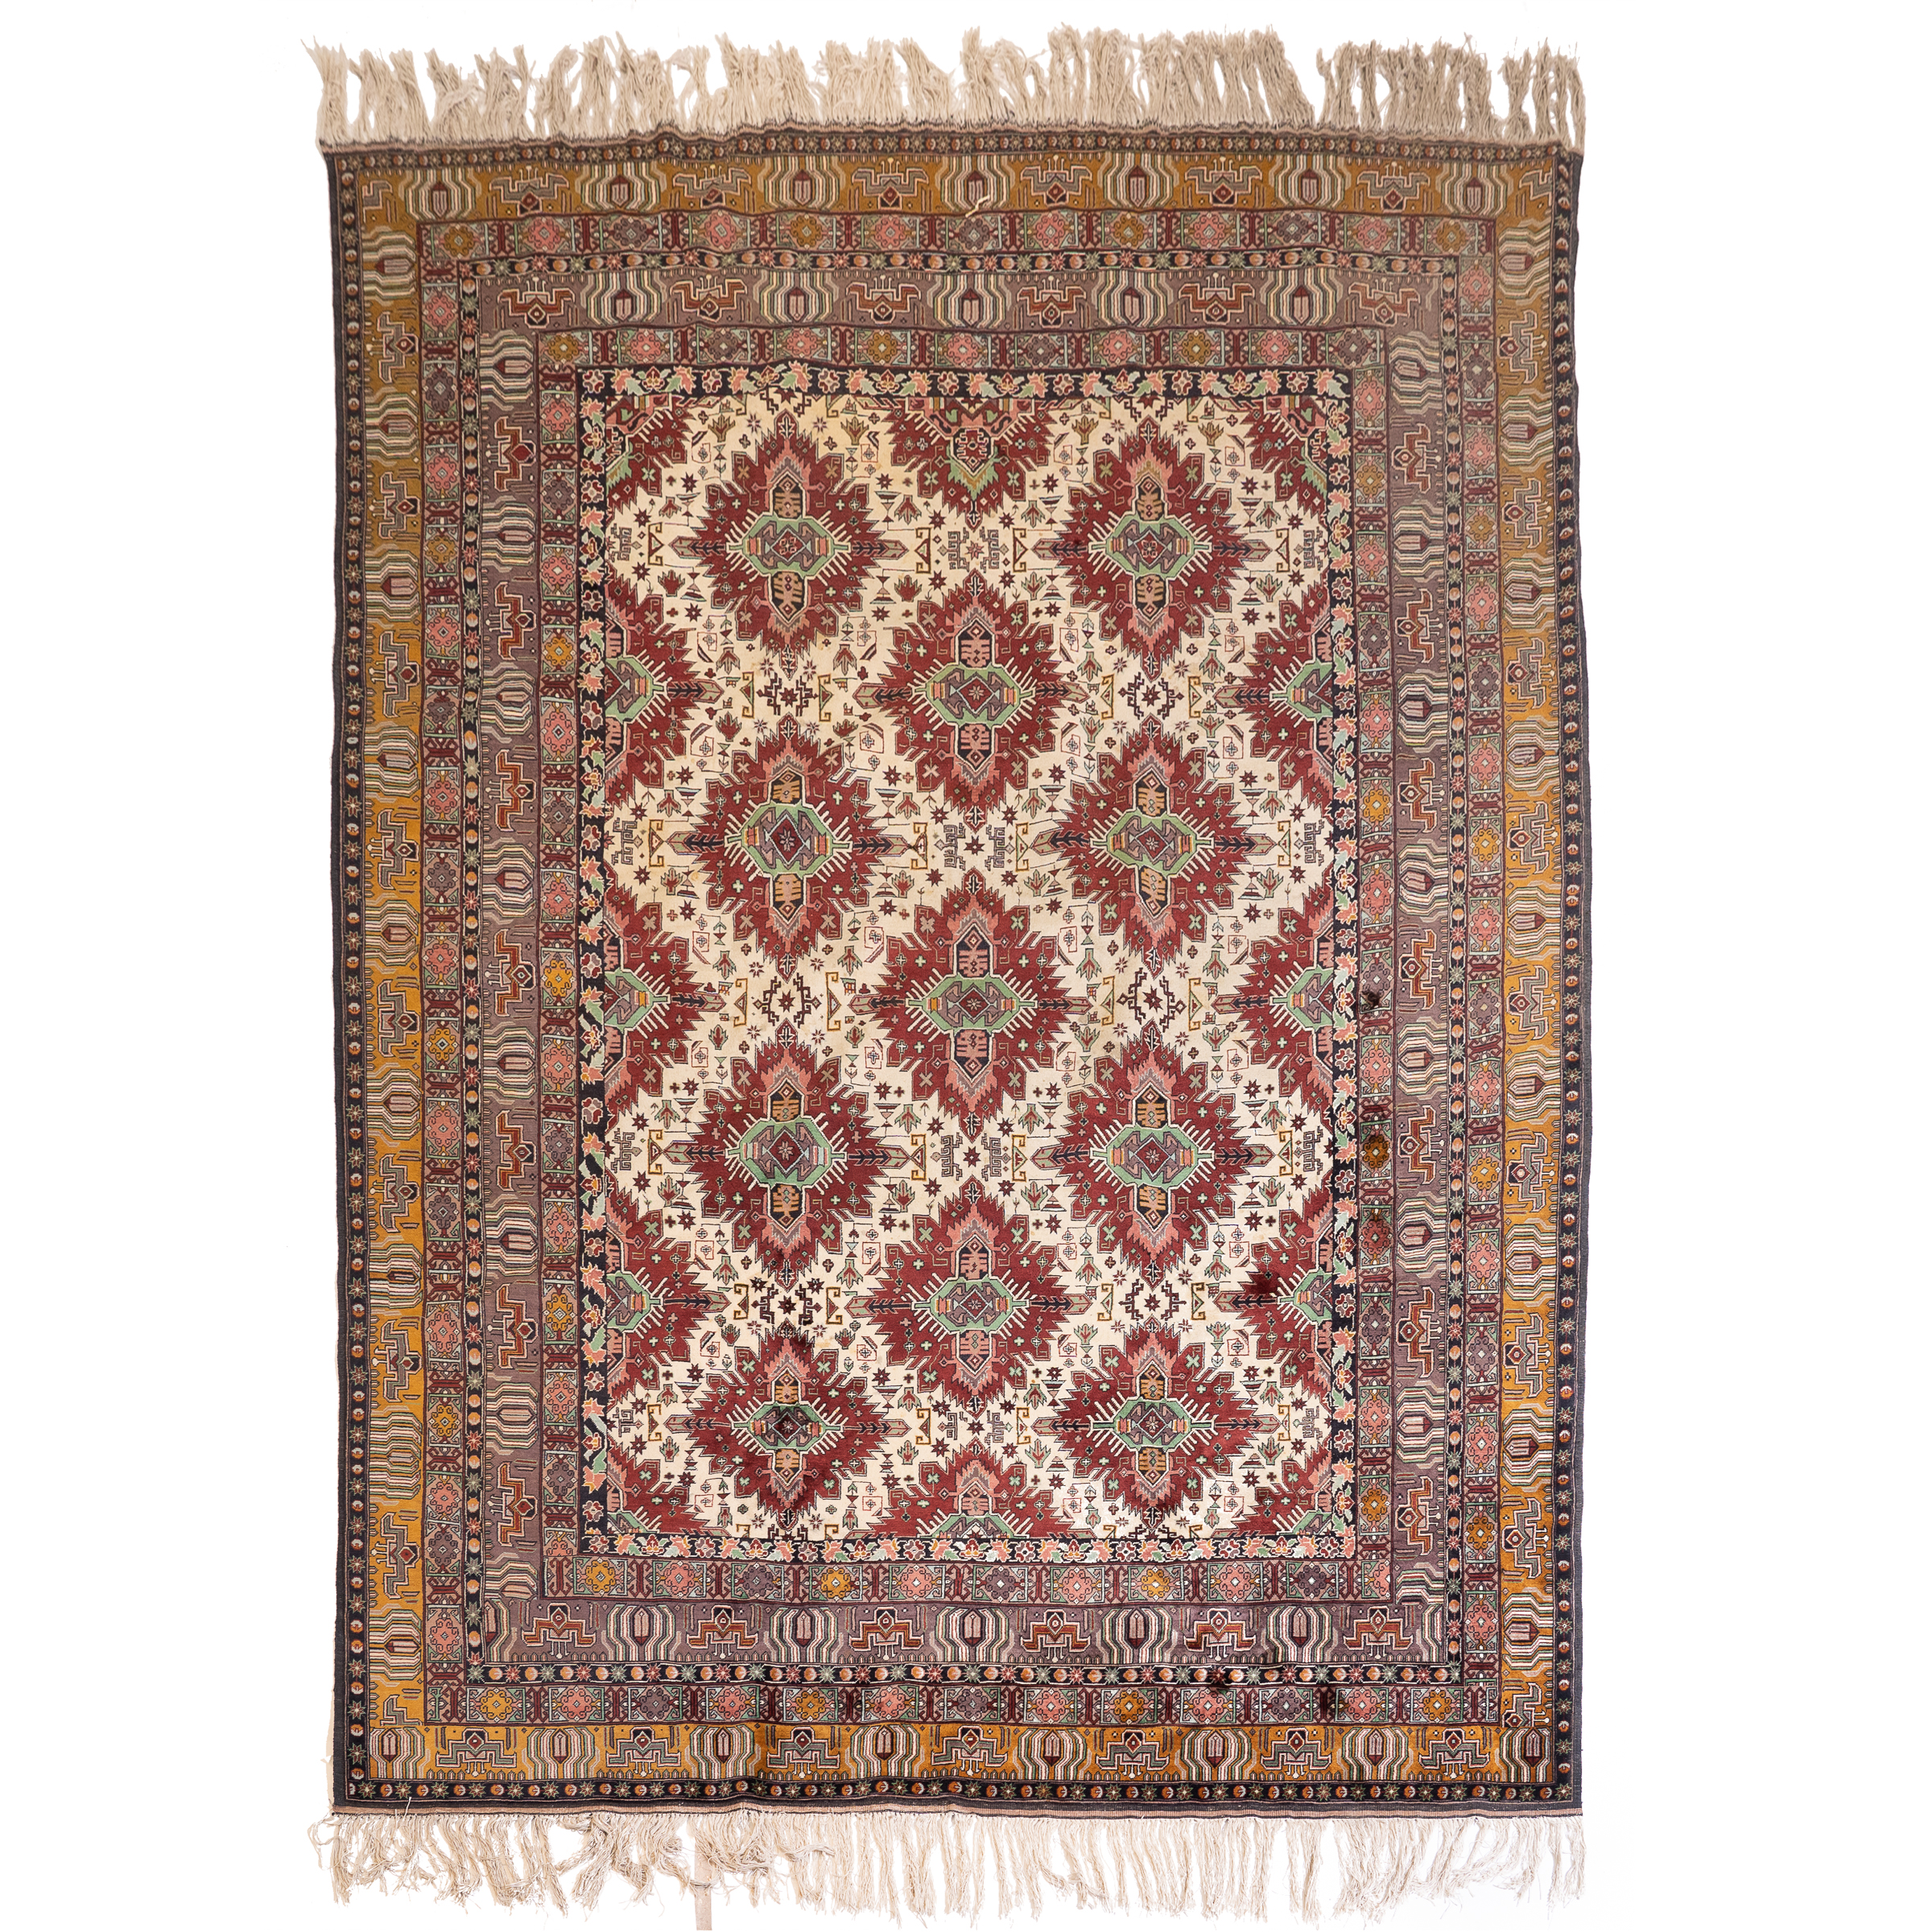 Indo Caucasian Carpet, late 20th cenutry